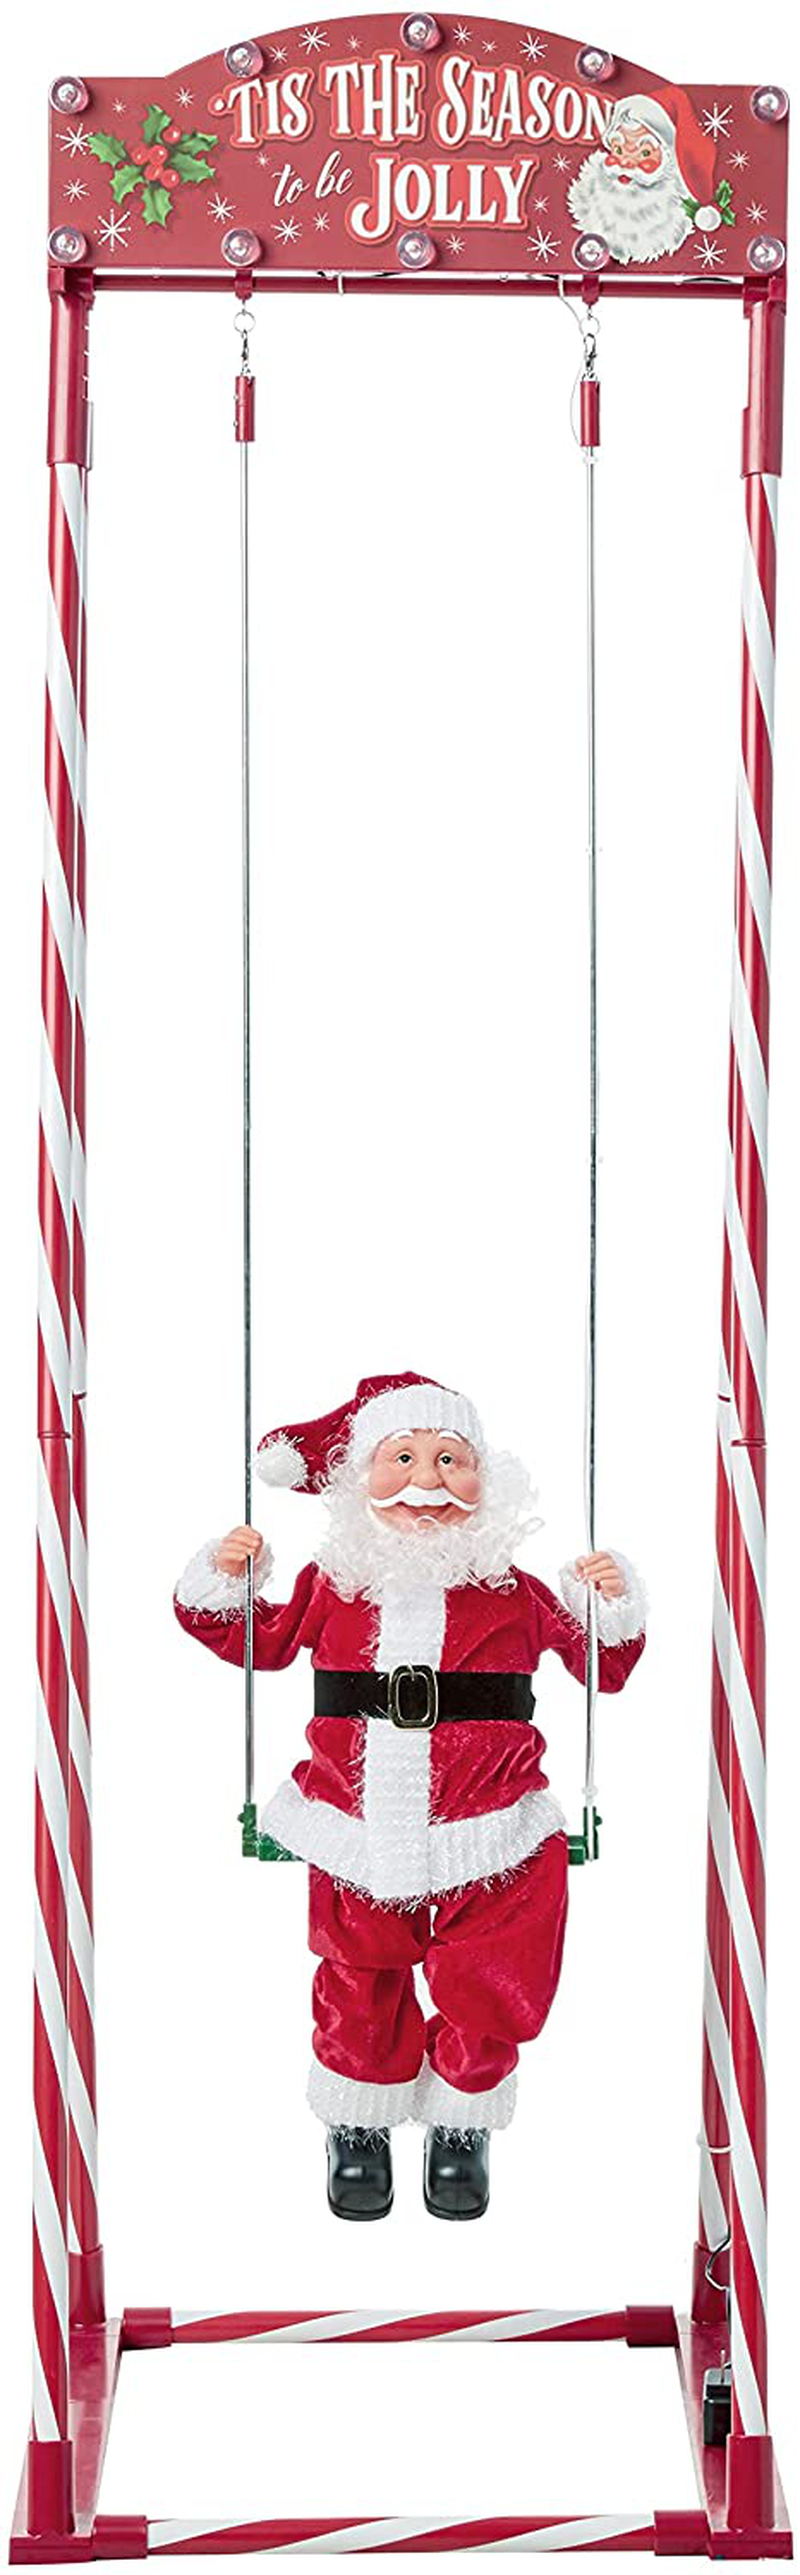 Mr. Christmas 68081 Swinging Santa Holiday Decoration, One Size, Multi Home & Garden > Decor > Seasonal & Holiday Decorations& Garden > Decor > Seasonal & Holiday Decorations Mr. Christmas   